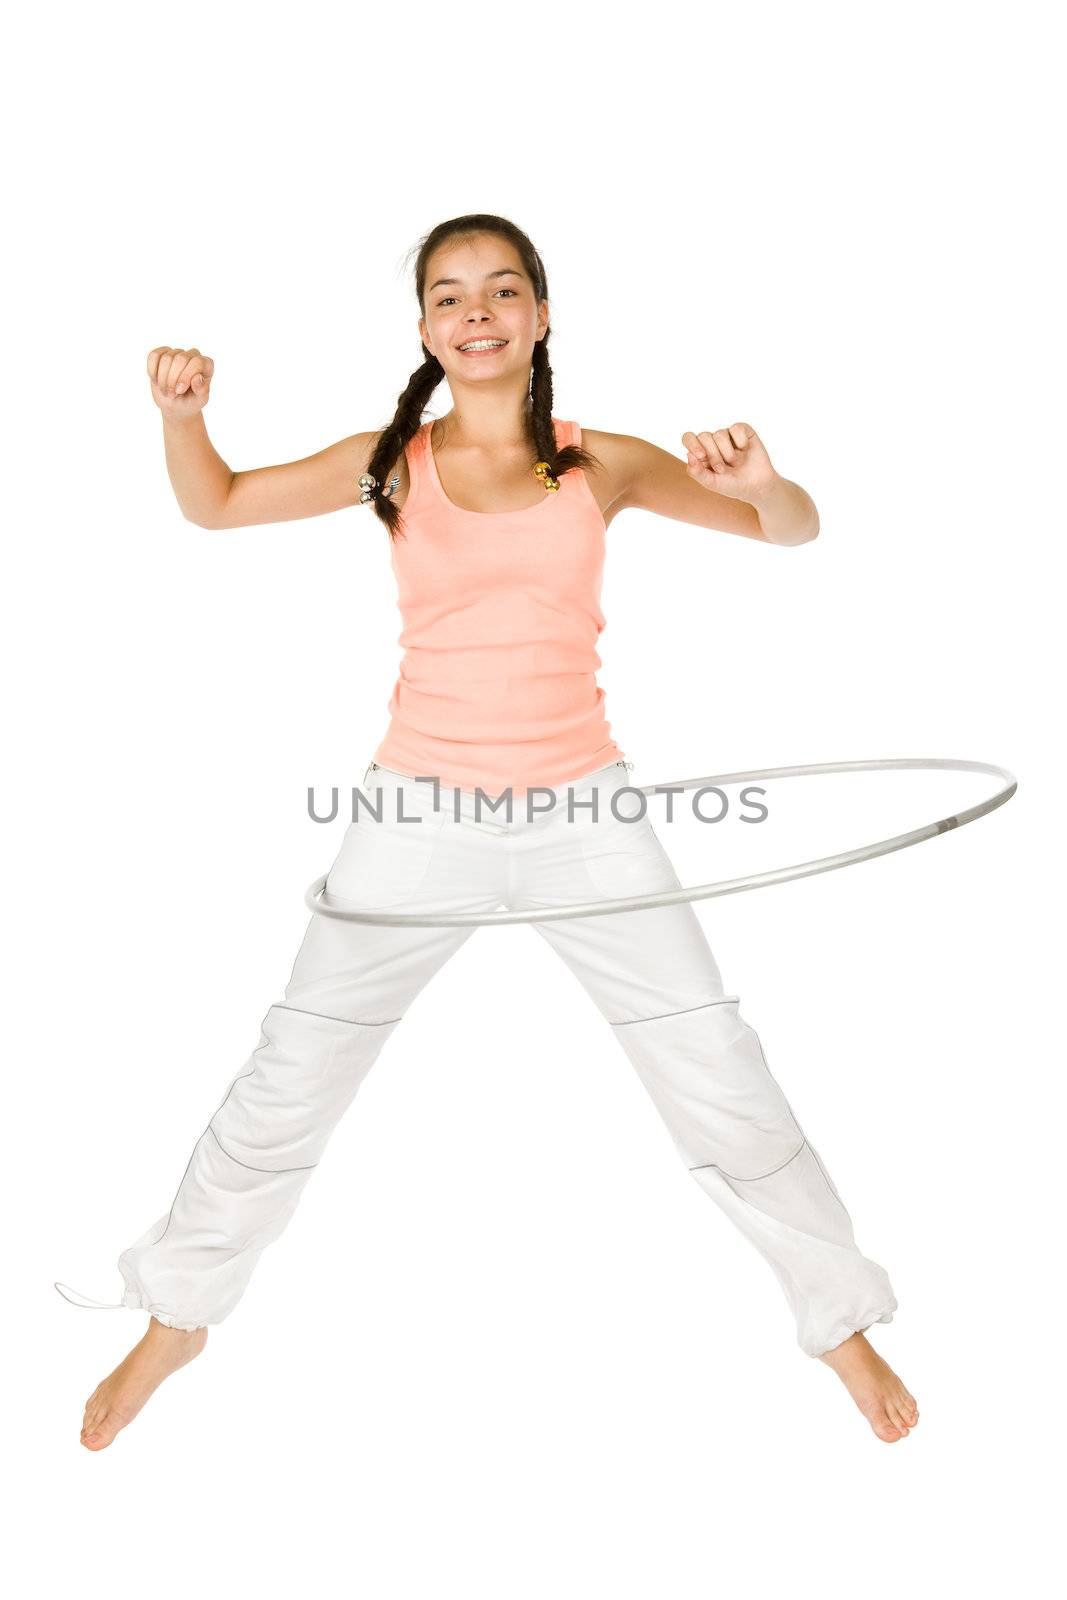 teenager girl with hula hoop by Gravicapa